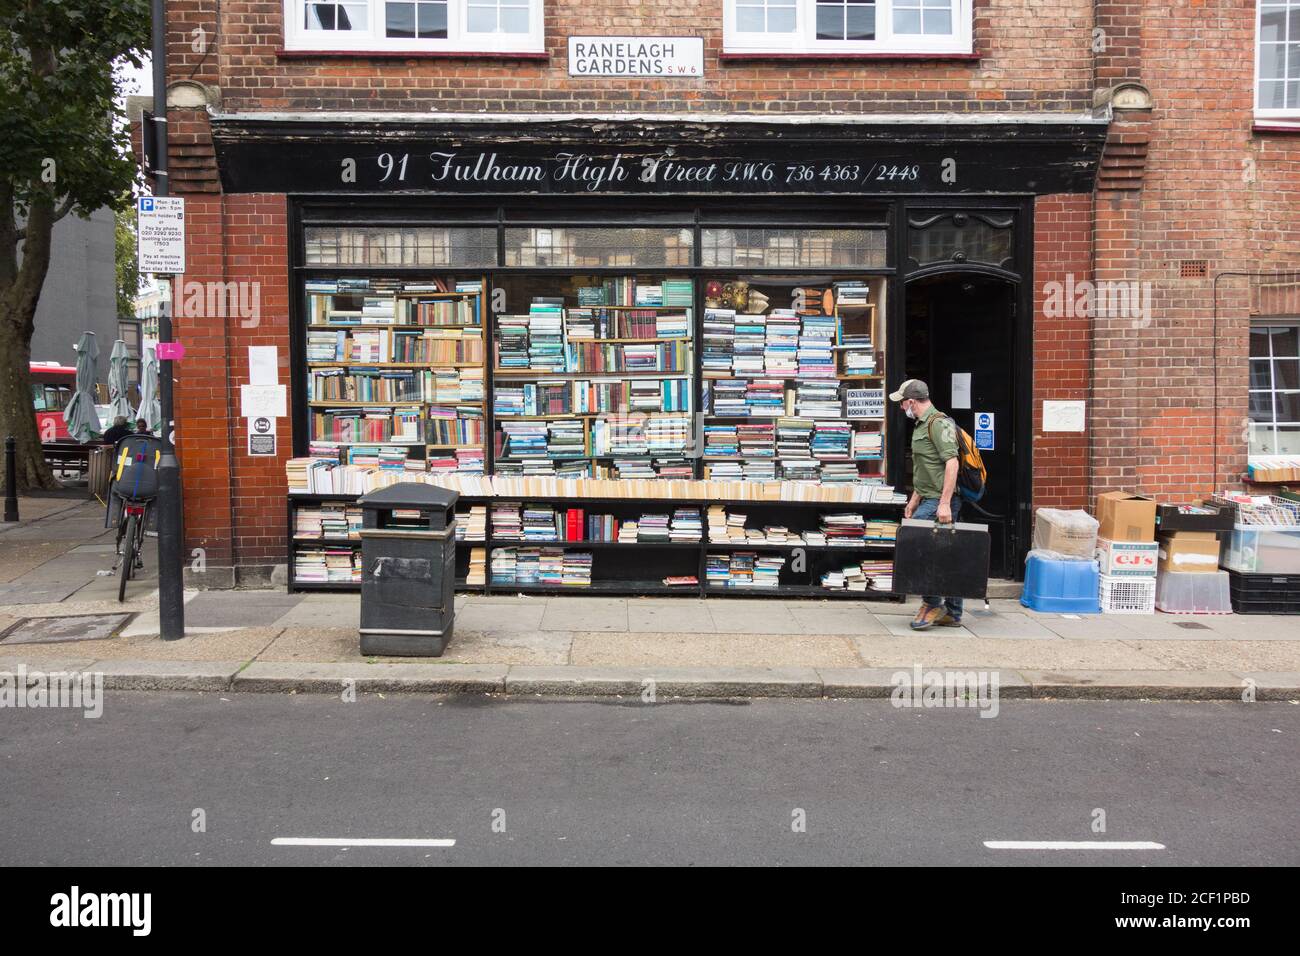 Hurlingham Bookshop, Ranelagh Gardens, Fulham High Street, London, SW6, U.K. Stock Photo